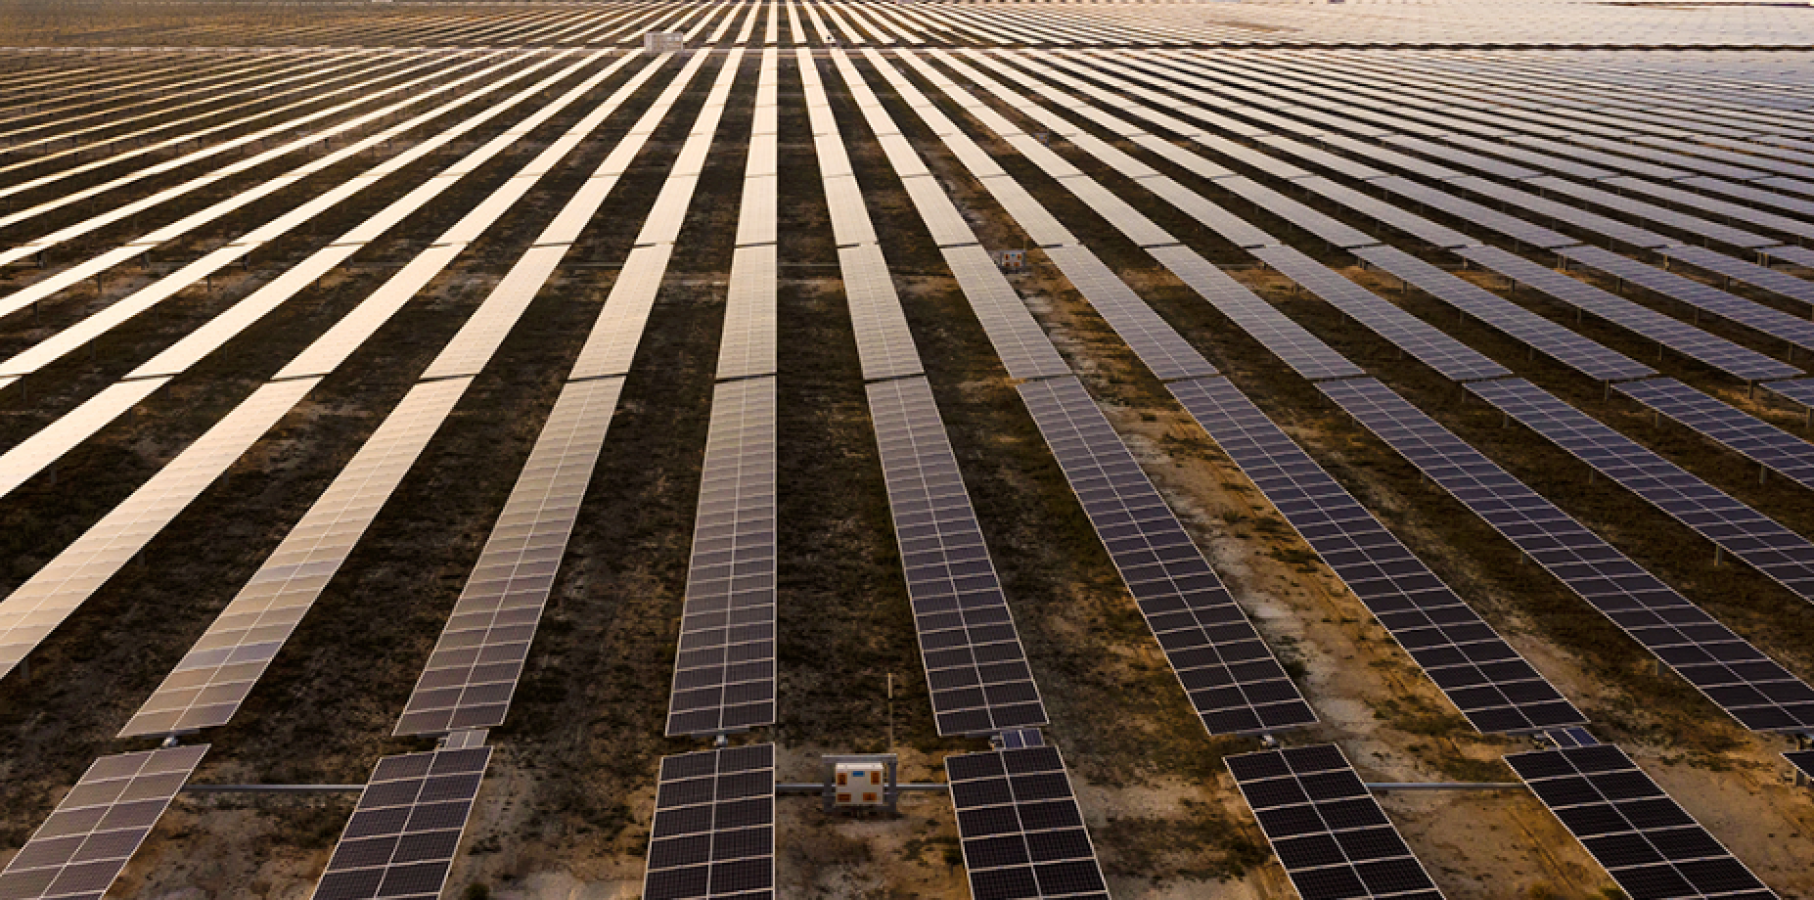 Viranşehir’e güneş enerji santrali kurulacak;